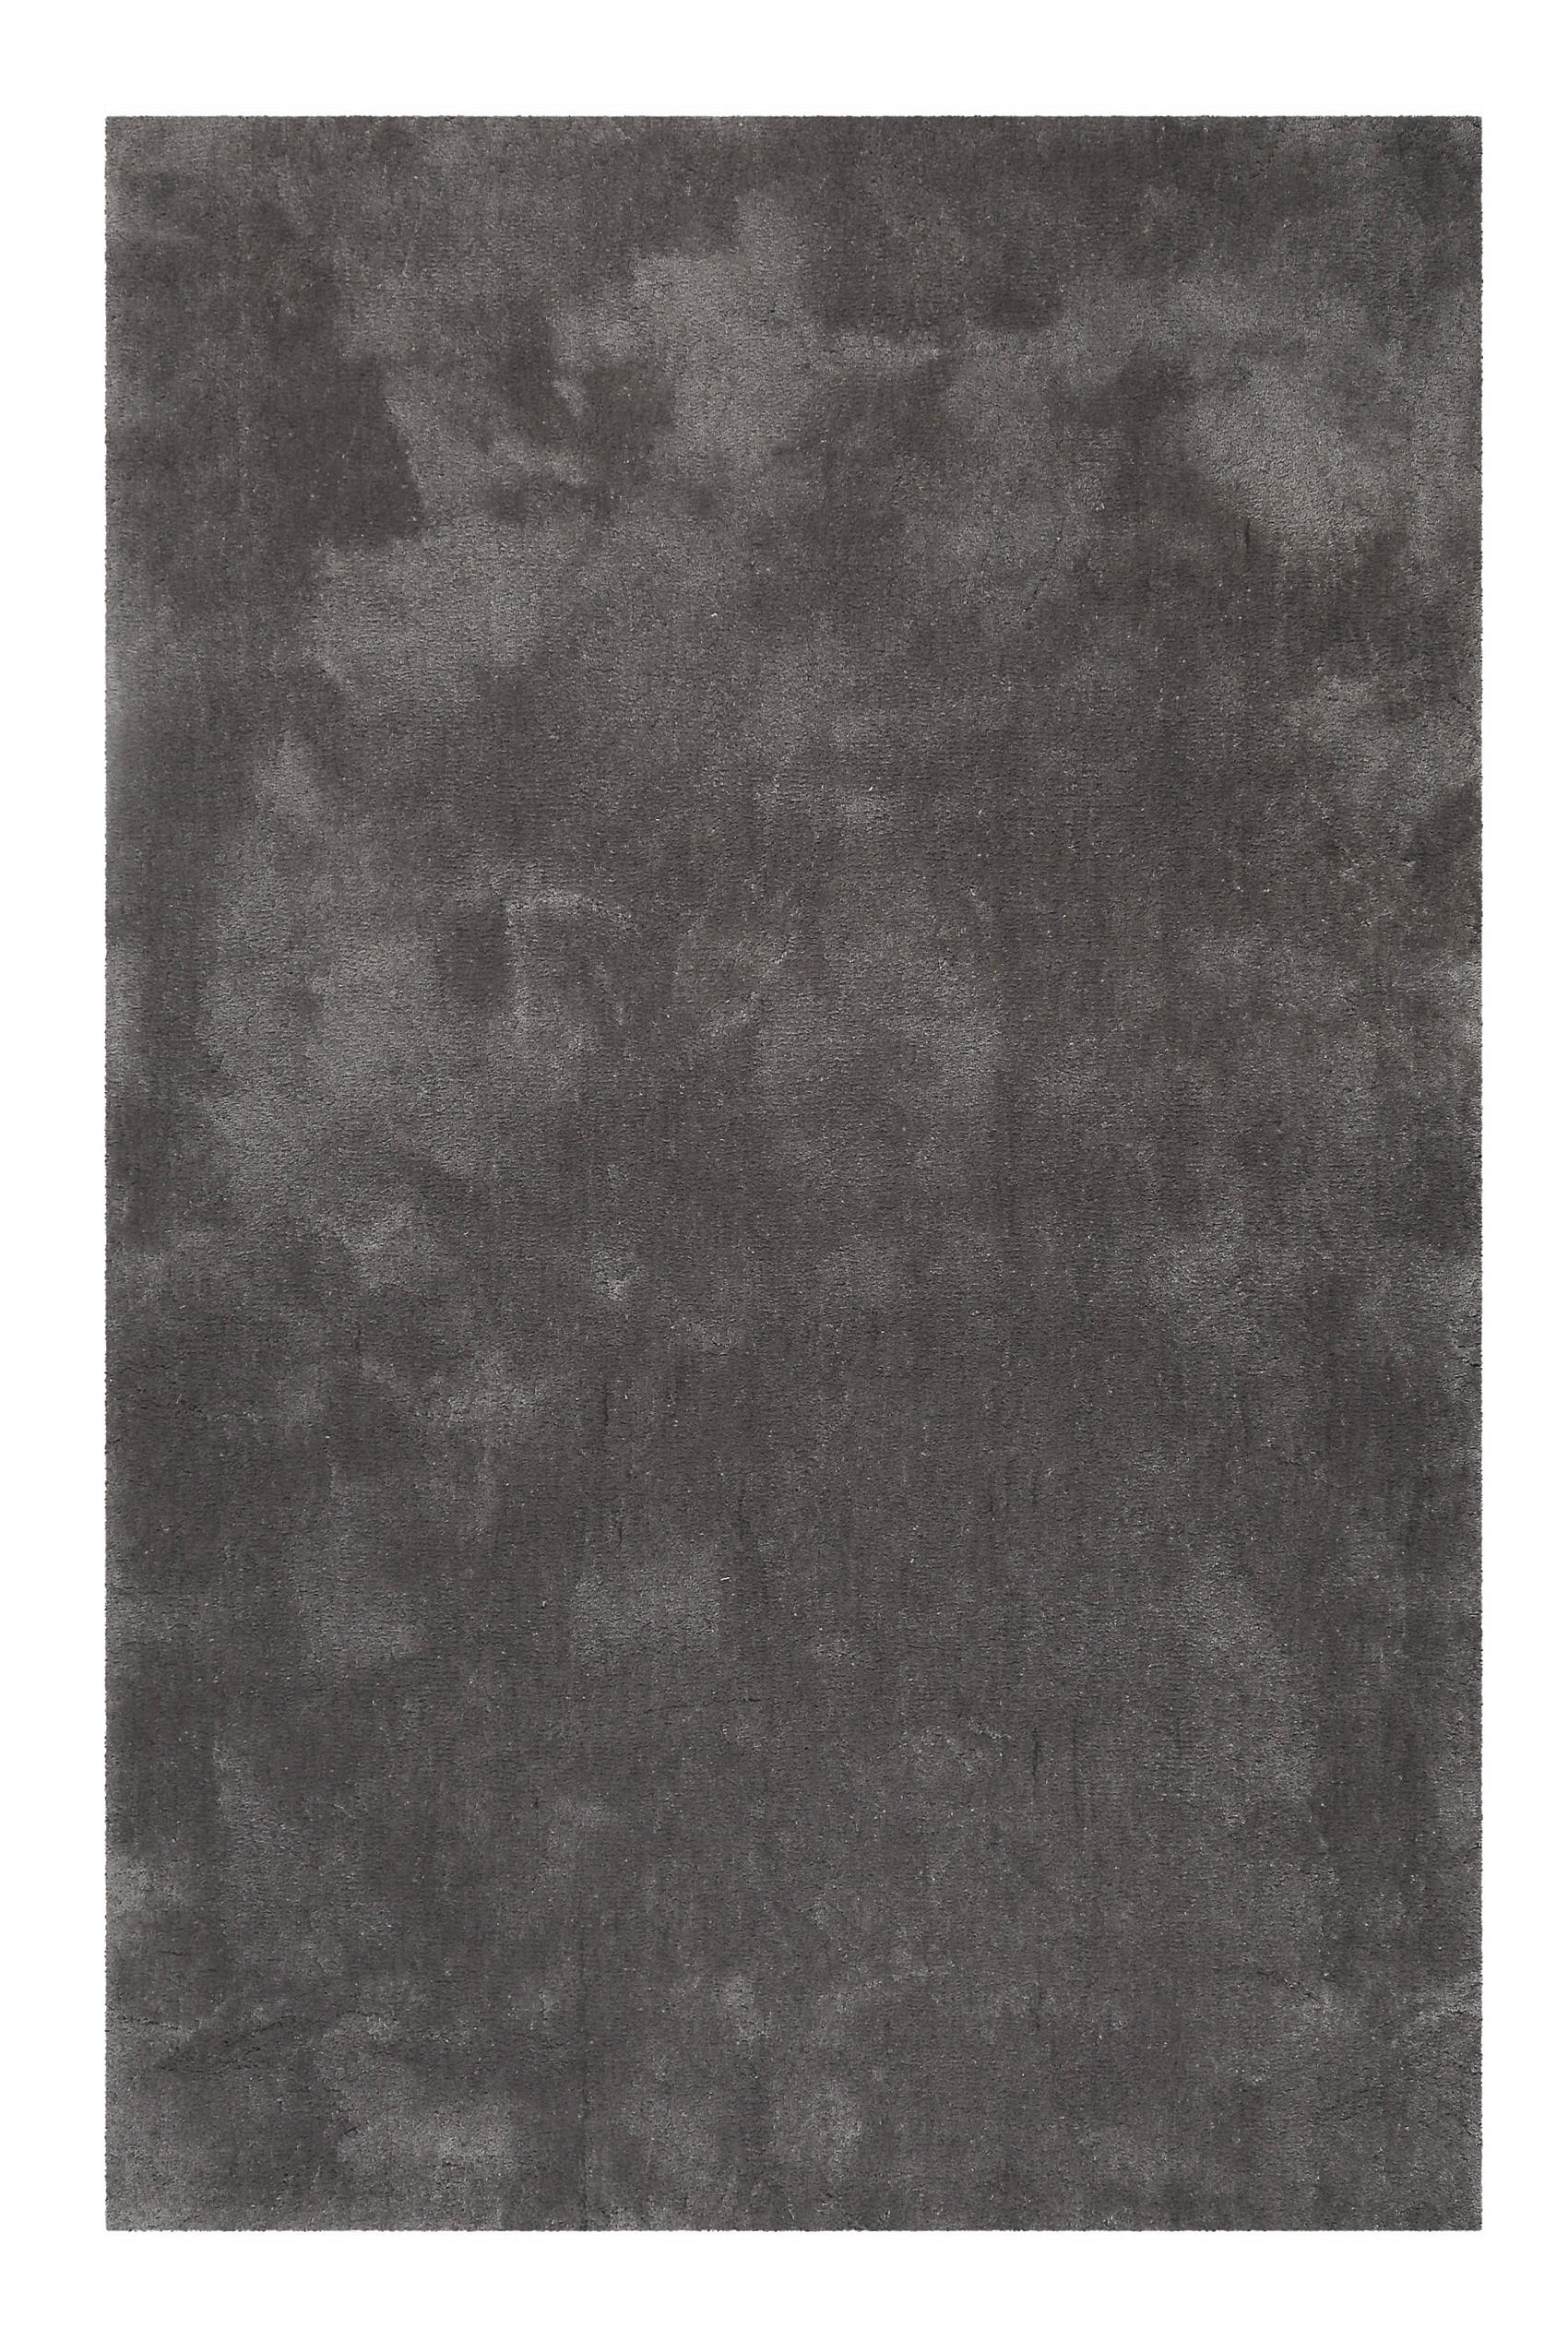 HOCHFLORTEPPICH 80/150 cm Emilia  - Grau, Design, Textil (80/150cm) - Novel